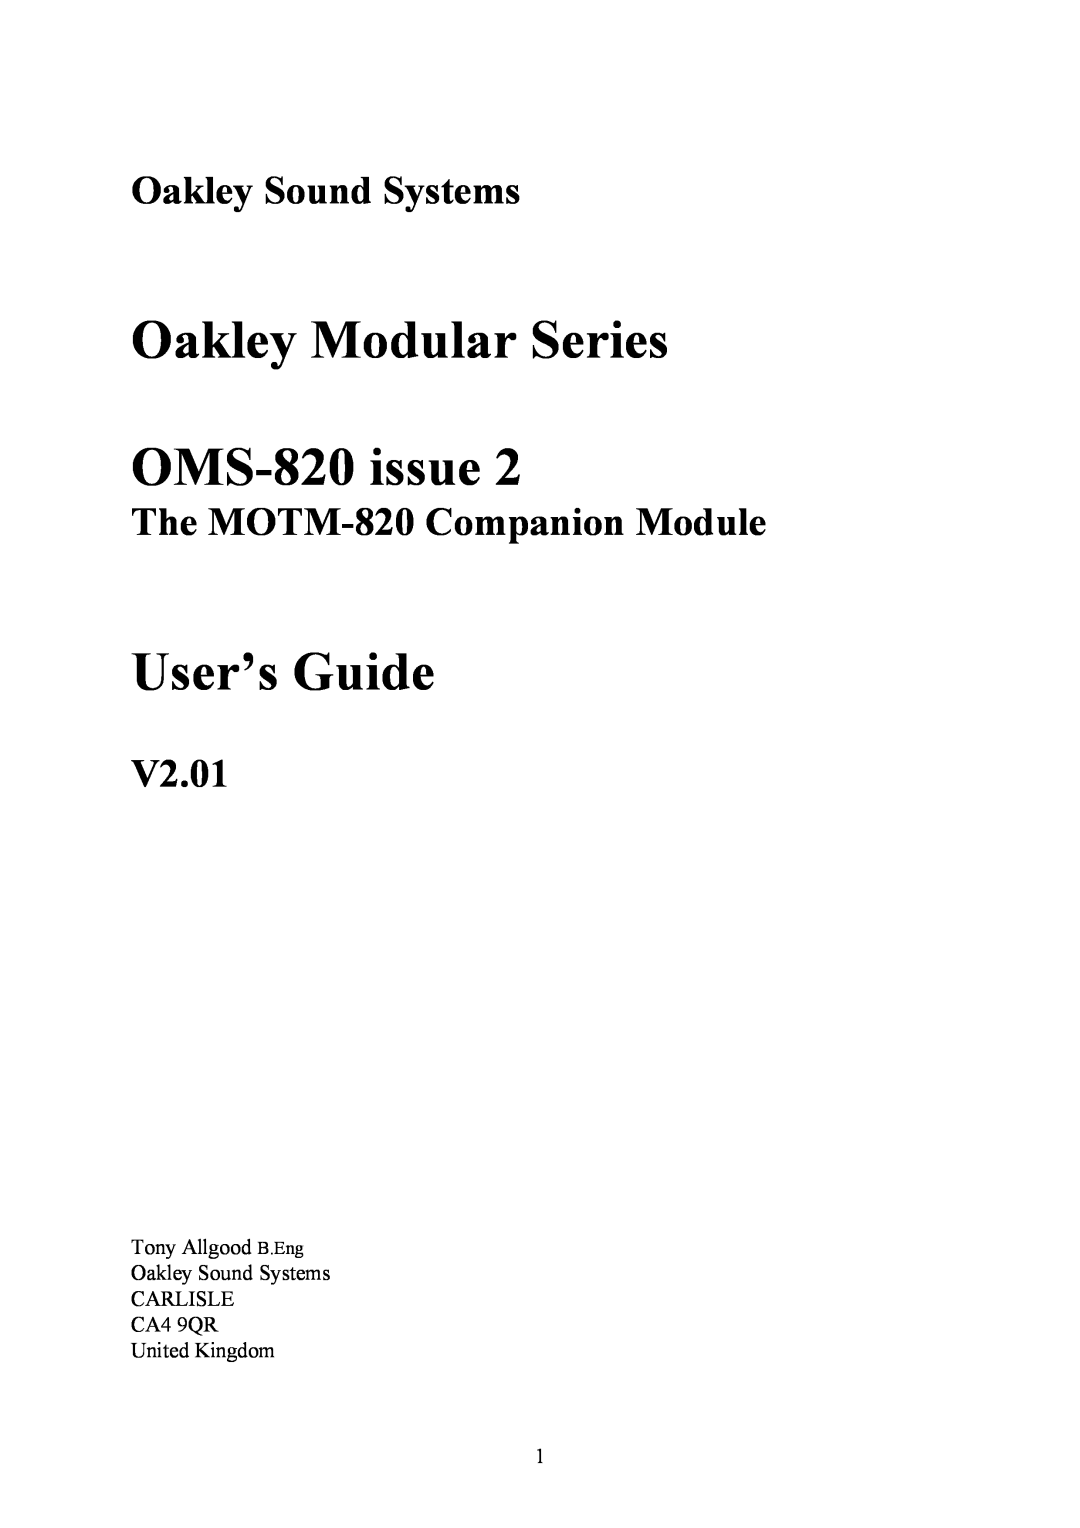 Oakley MOTM-820 manual Oakley Modular Series OMS-820 issue, User’s Guide, Oakley Sound Systems, V2.01 